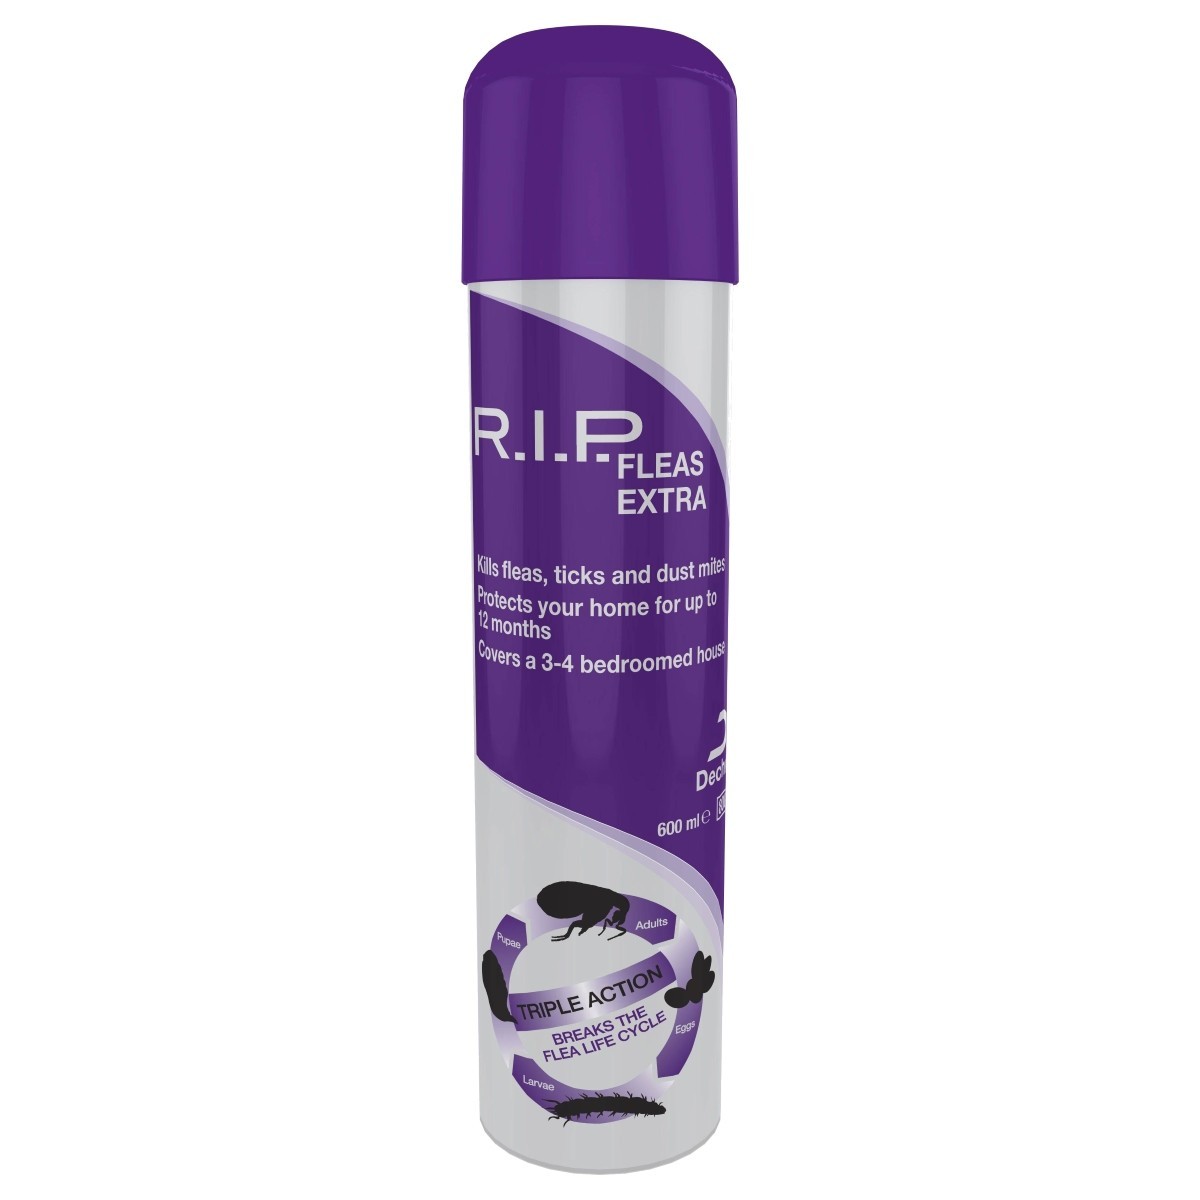 R.I.P Fleas Extra Household Flea Spray 